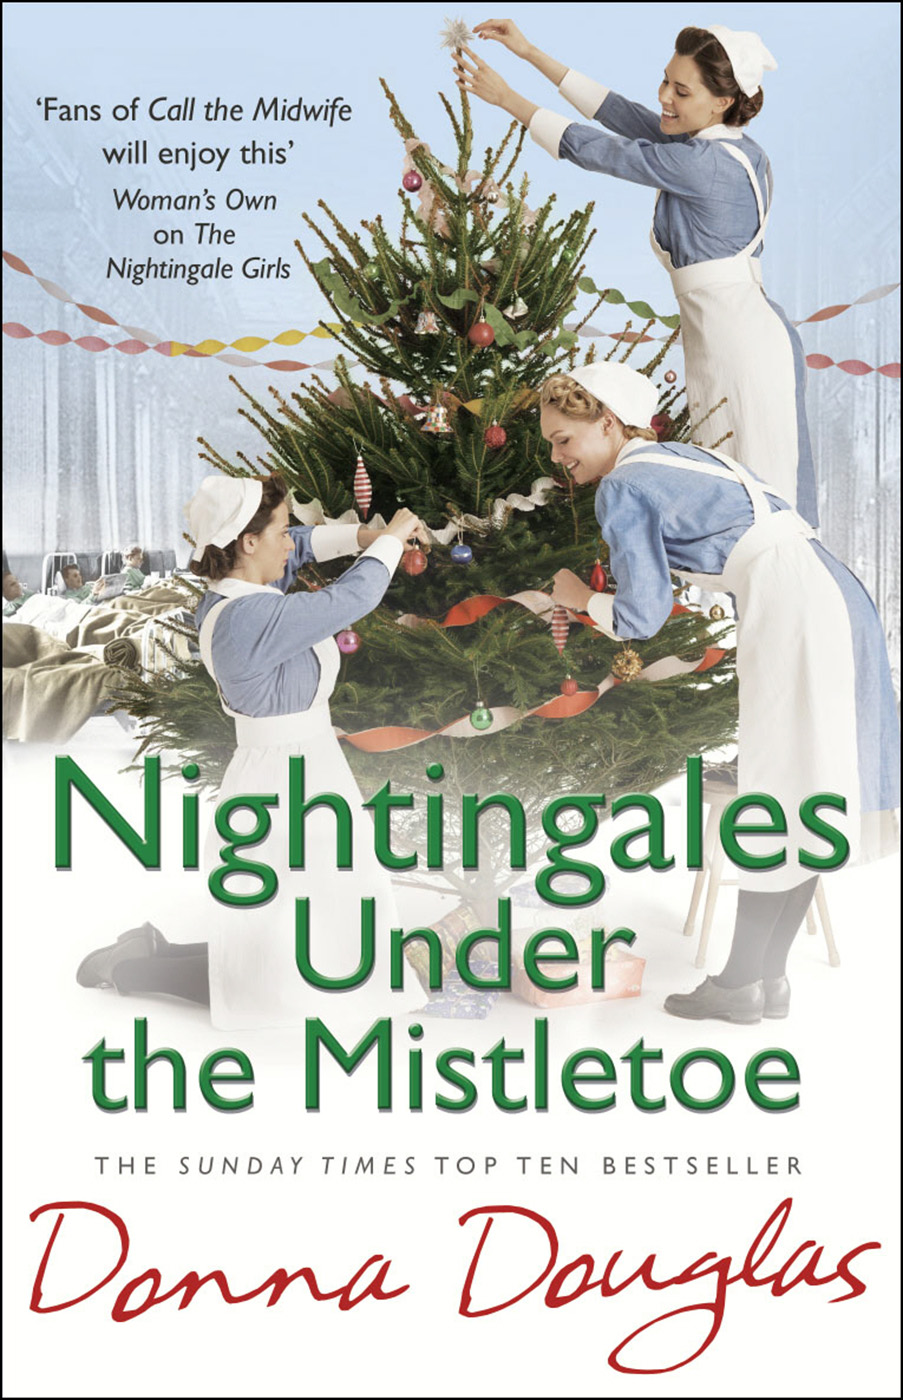 Nightingales Under the Mistletoe (1992) by Donna Douglas